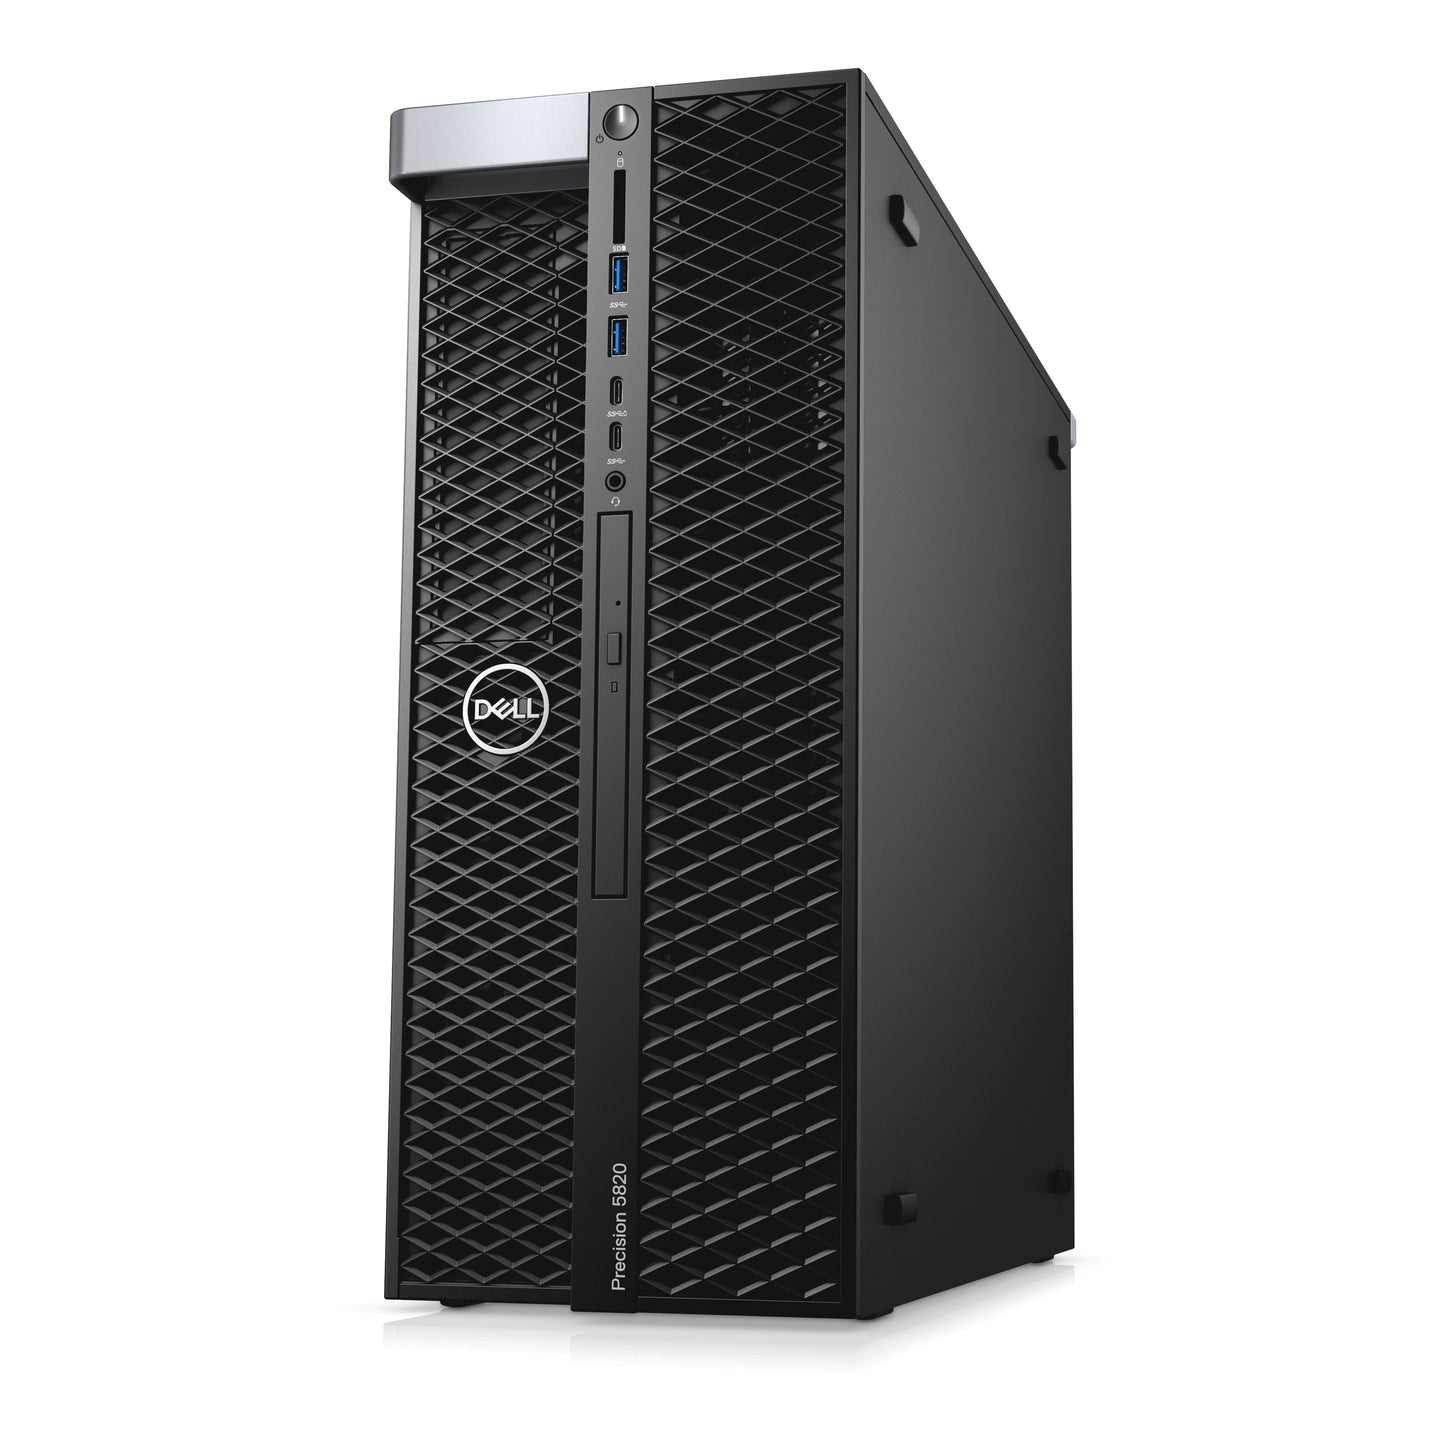 Dell Precision 5820 Tower Workstation Desktop Computers (Open Box)